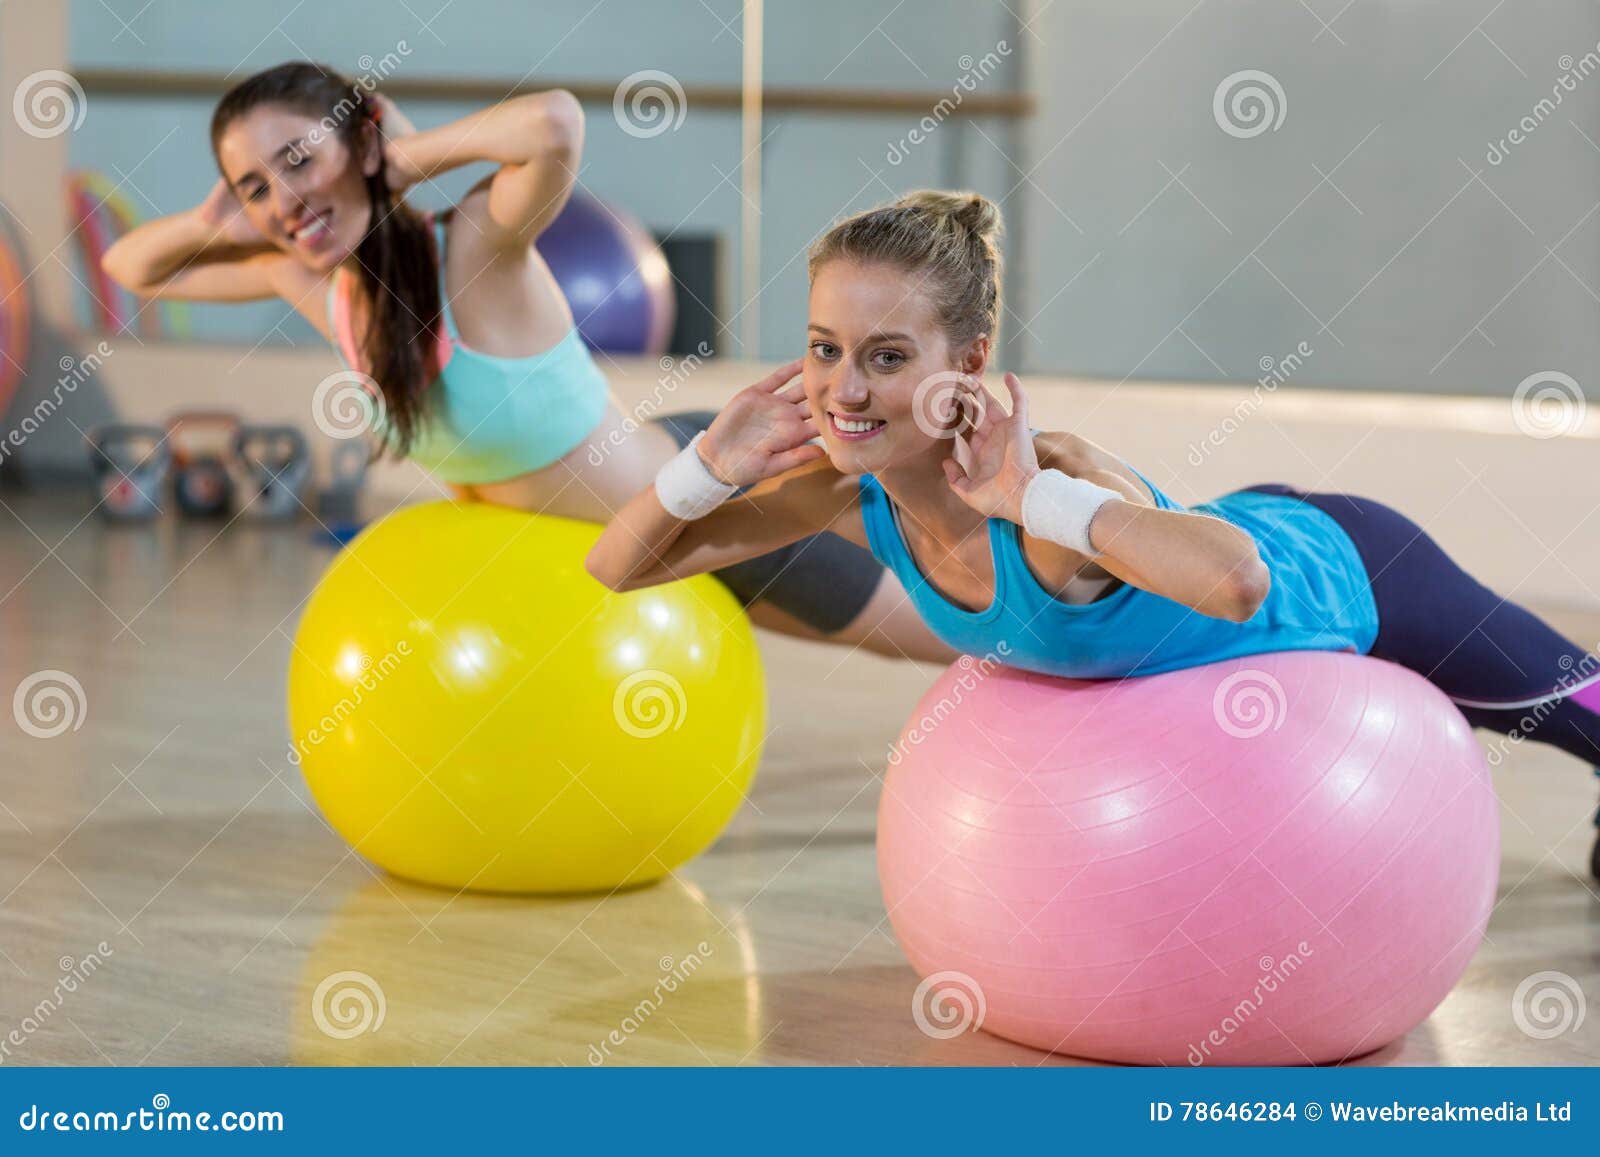 Two Women Exercising On Exercise Ball Stock Photo Image Of Smiling